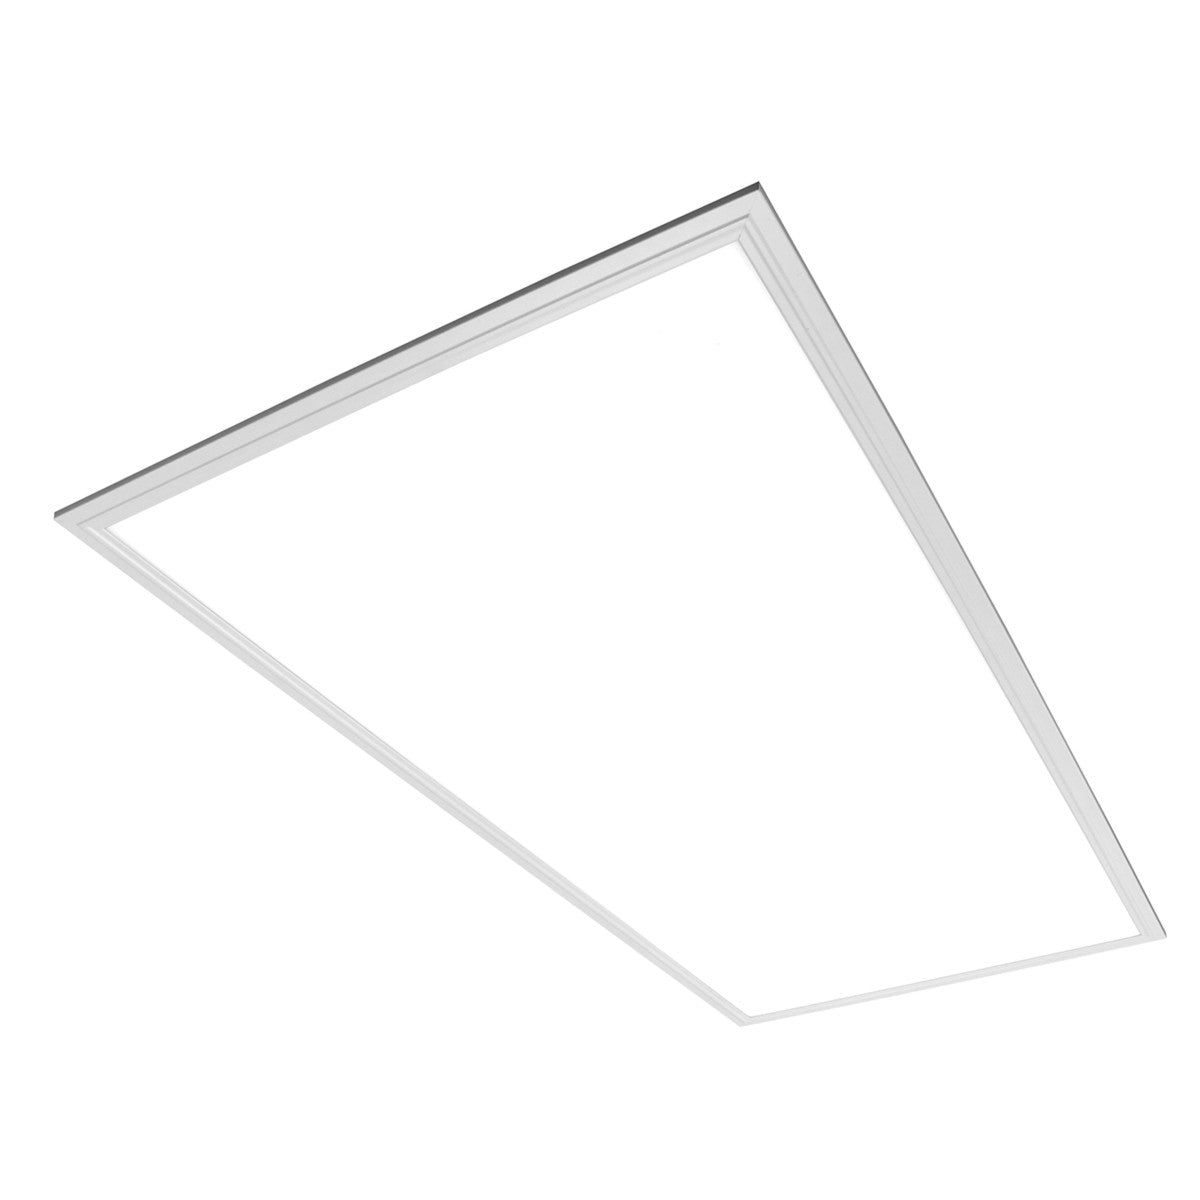 2 x 4 LED Panel Light 50W Premium DLC 5000K Drop Ceiling UL